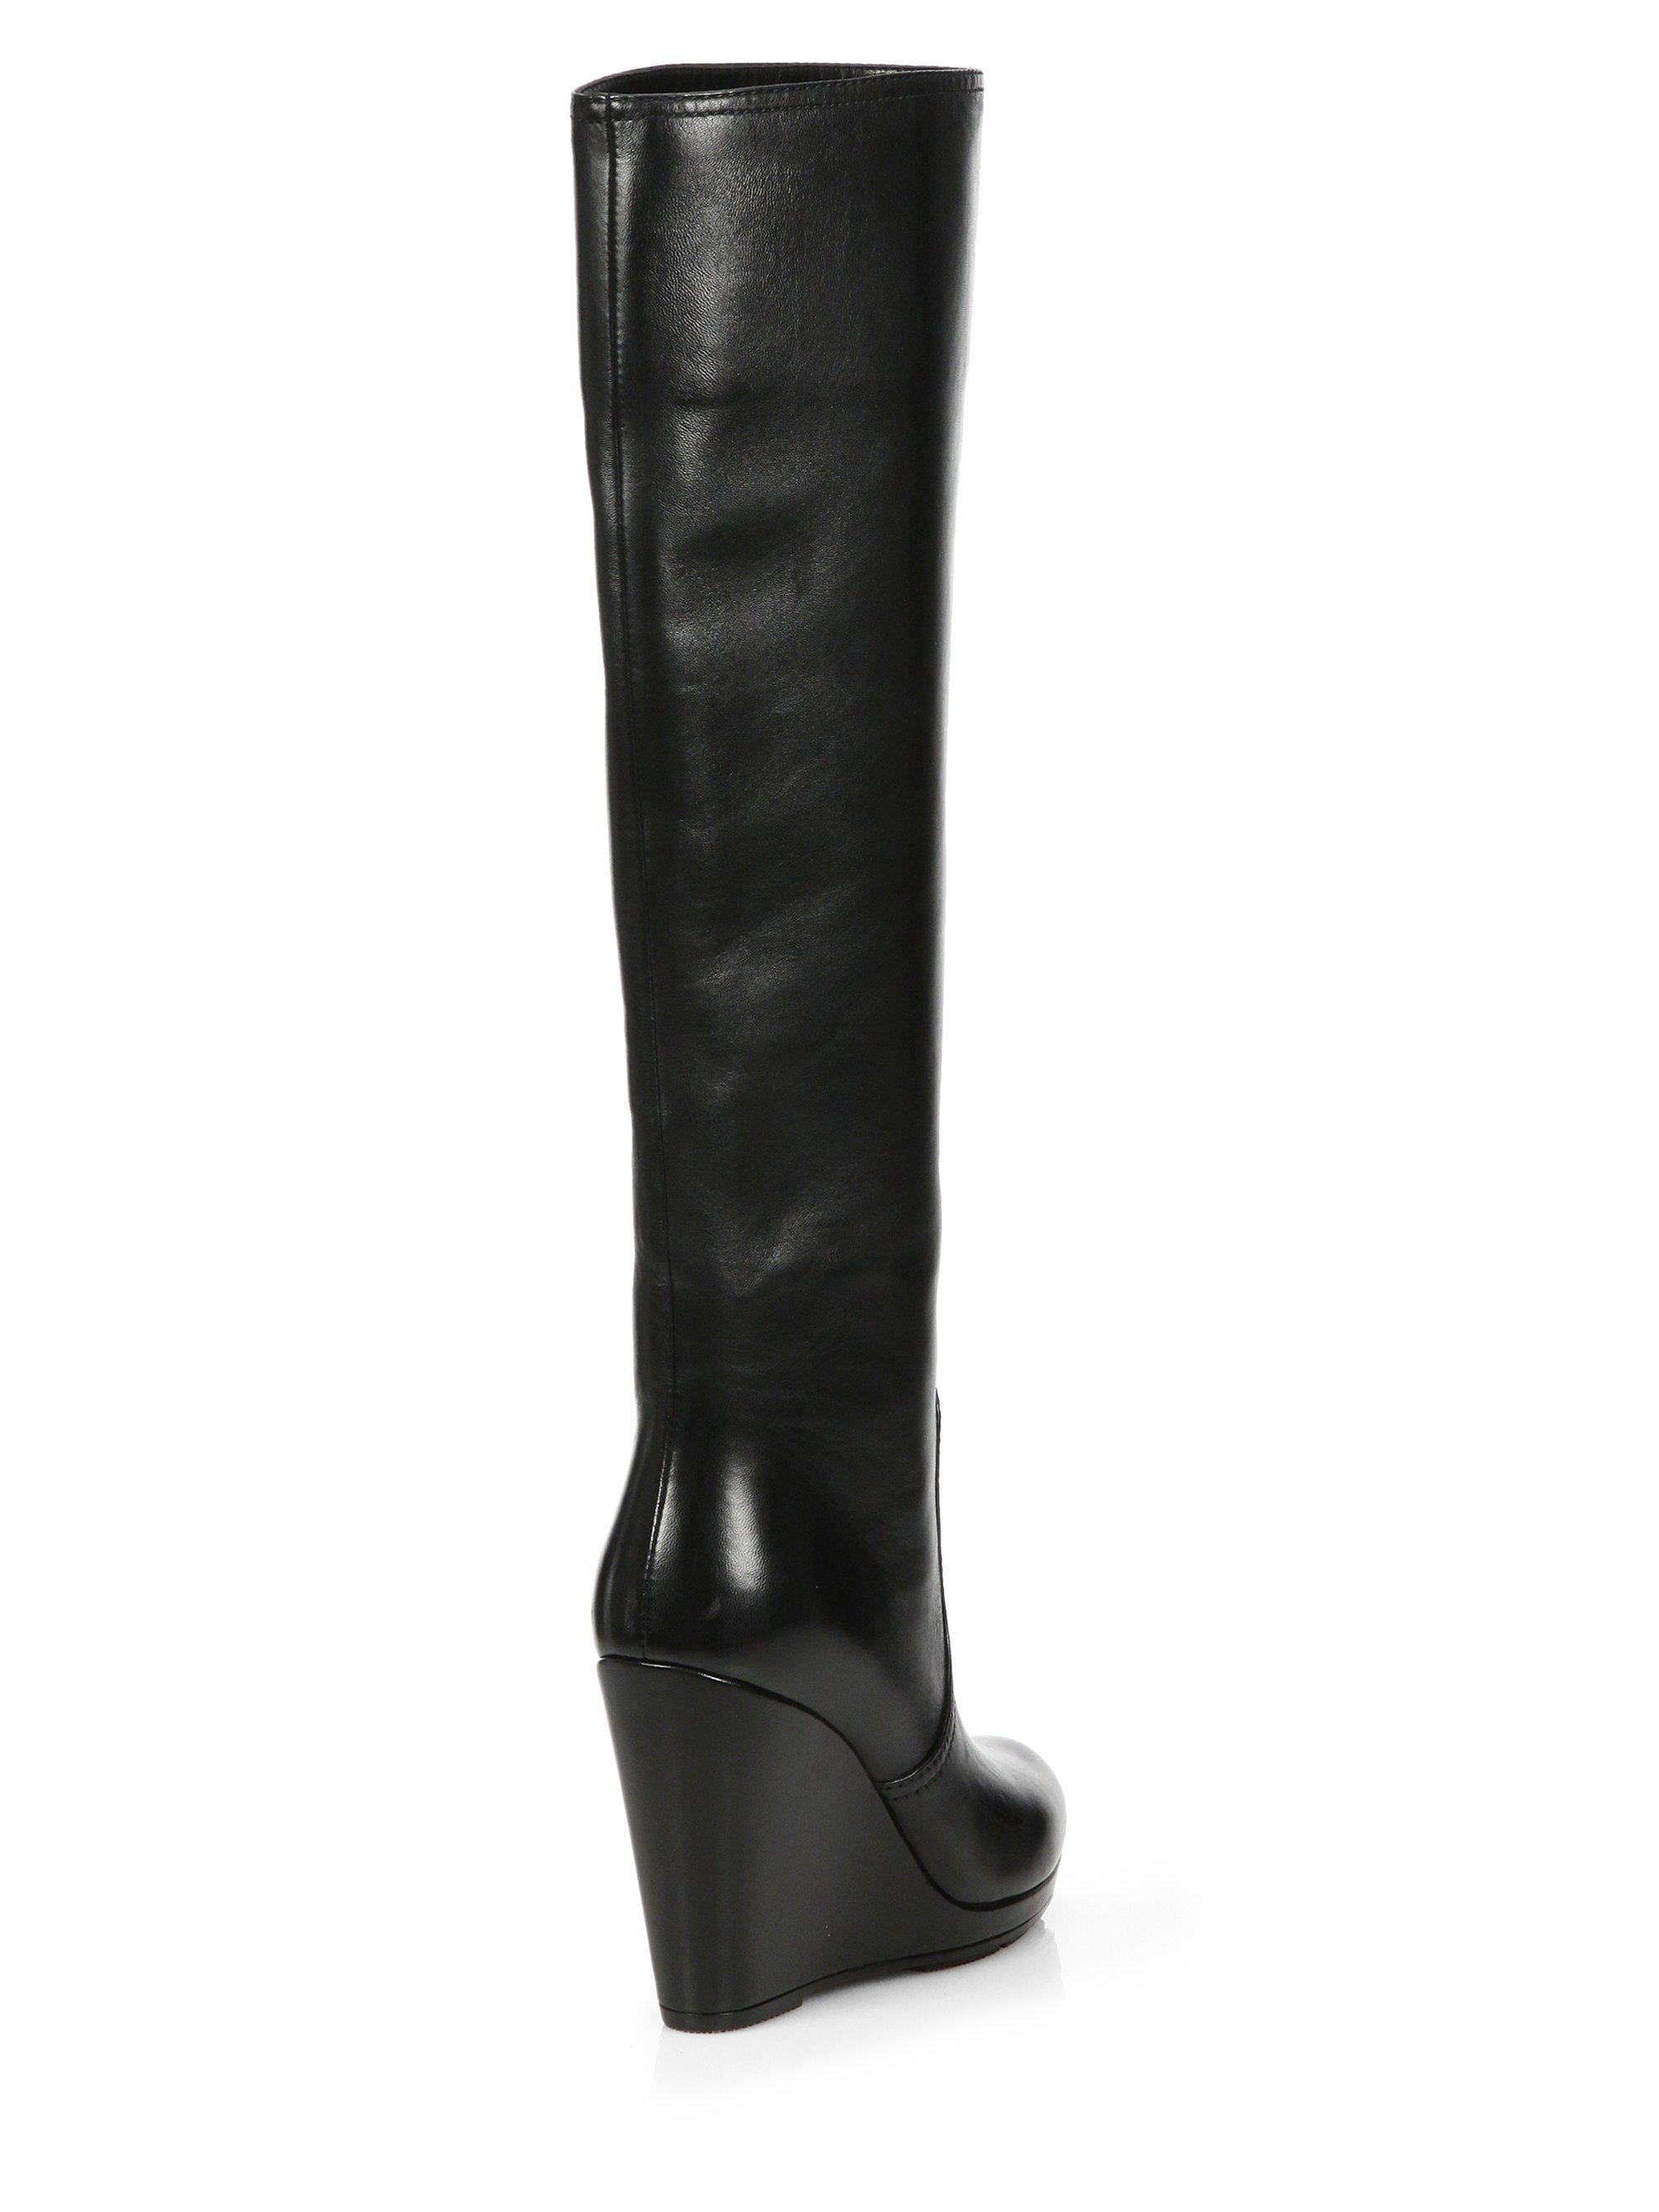 Prada Tall Leather Wedge Boots in Nero-Black (Black) - Lyst